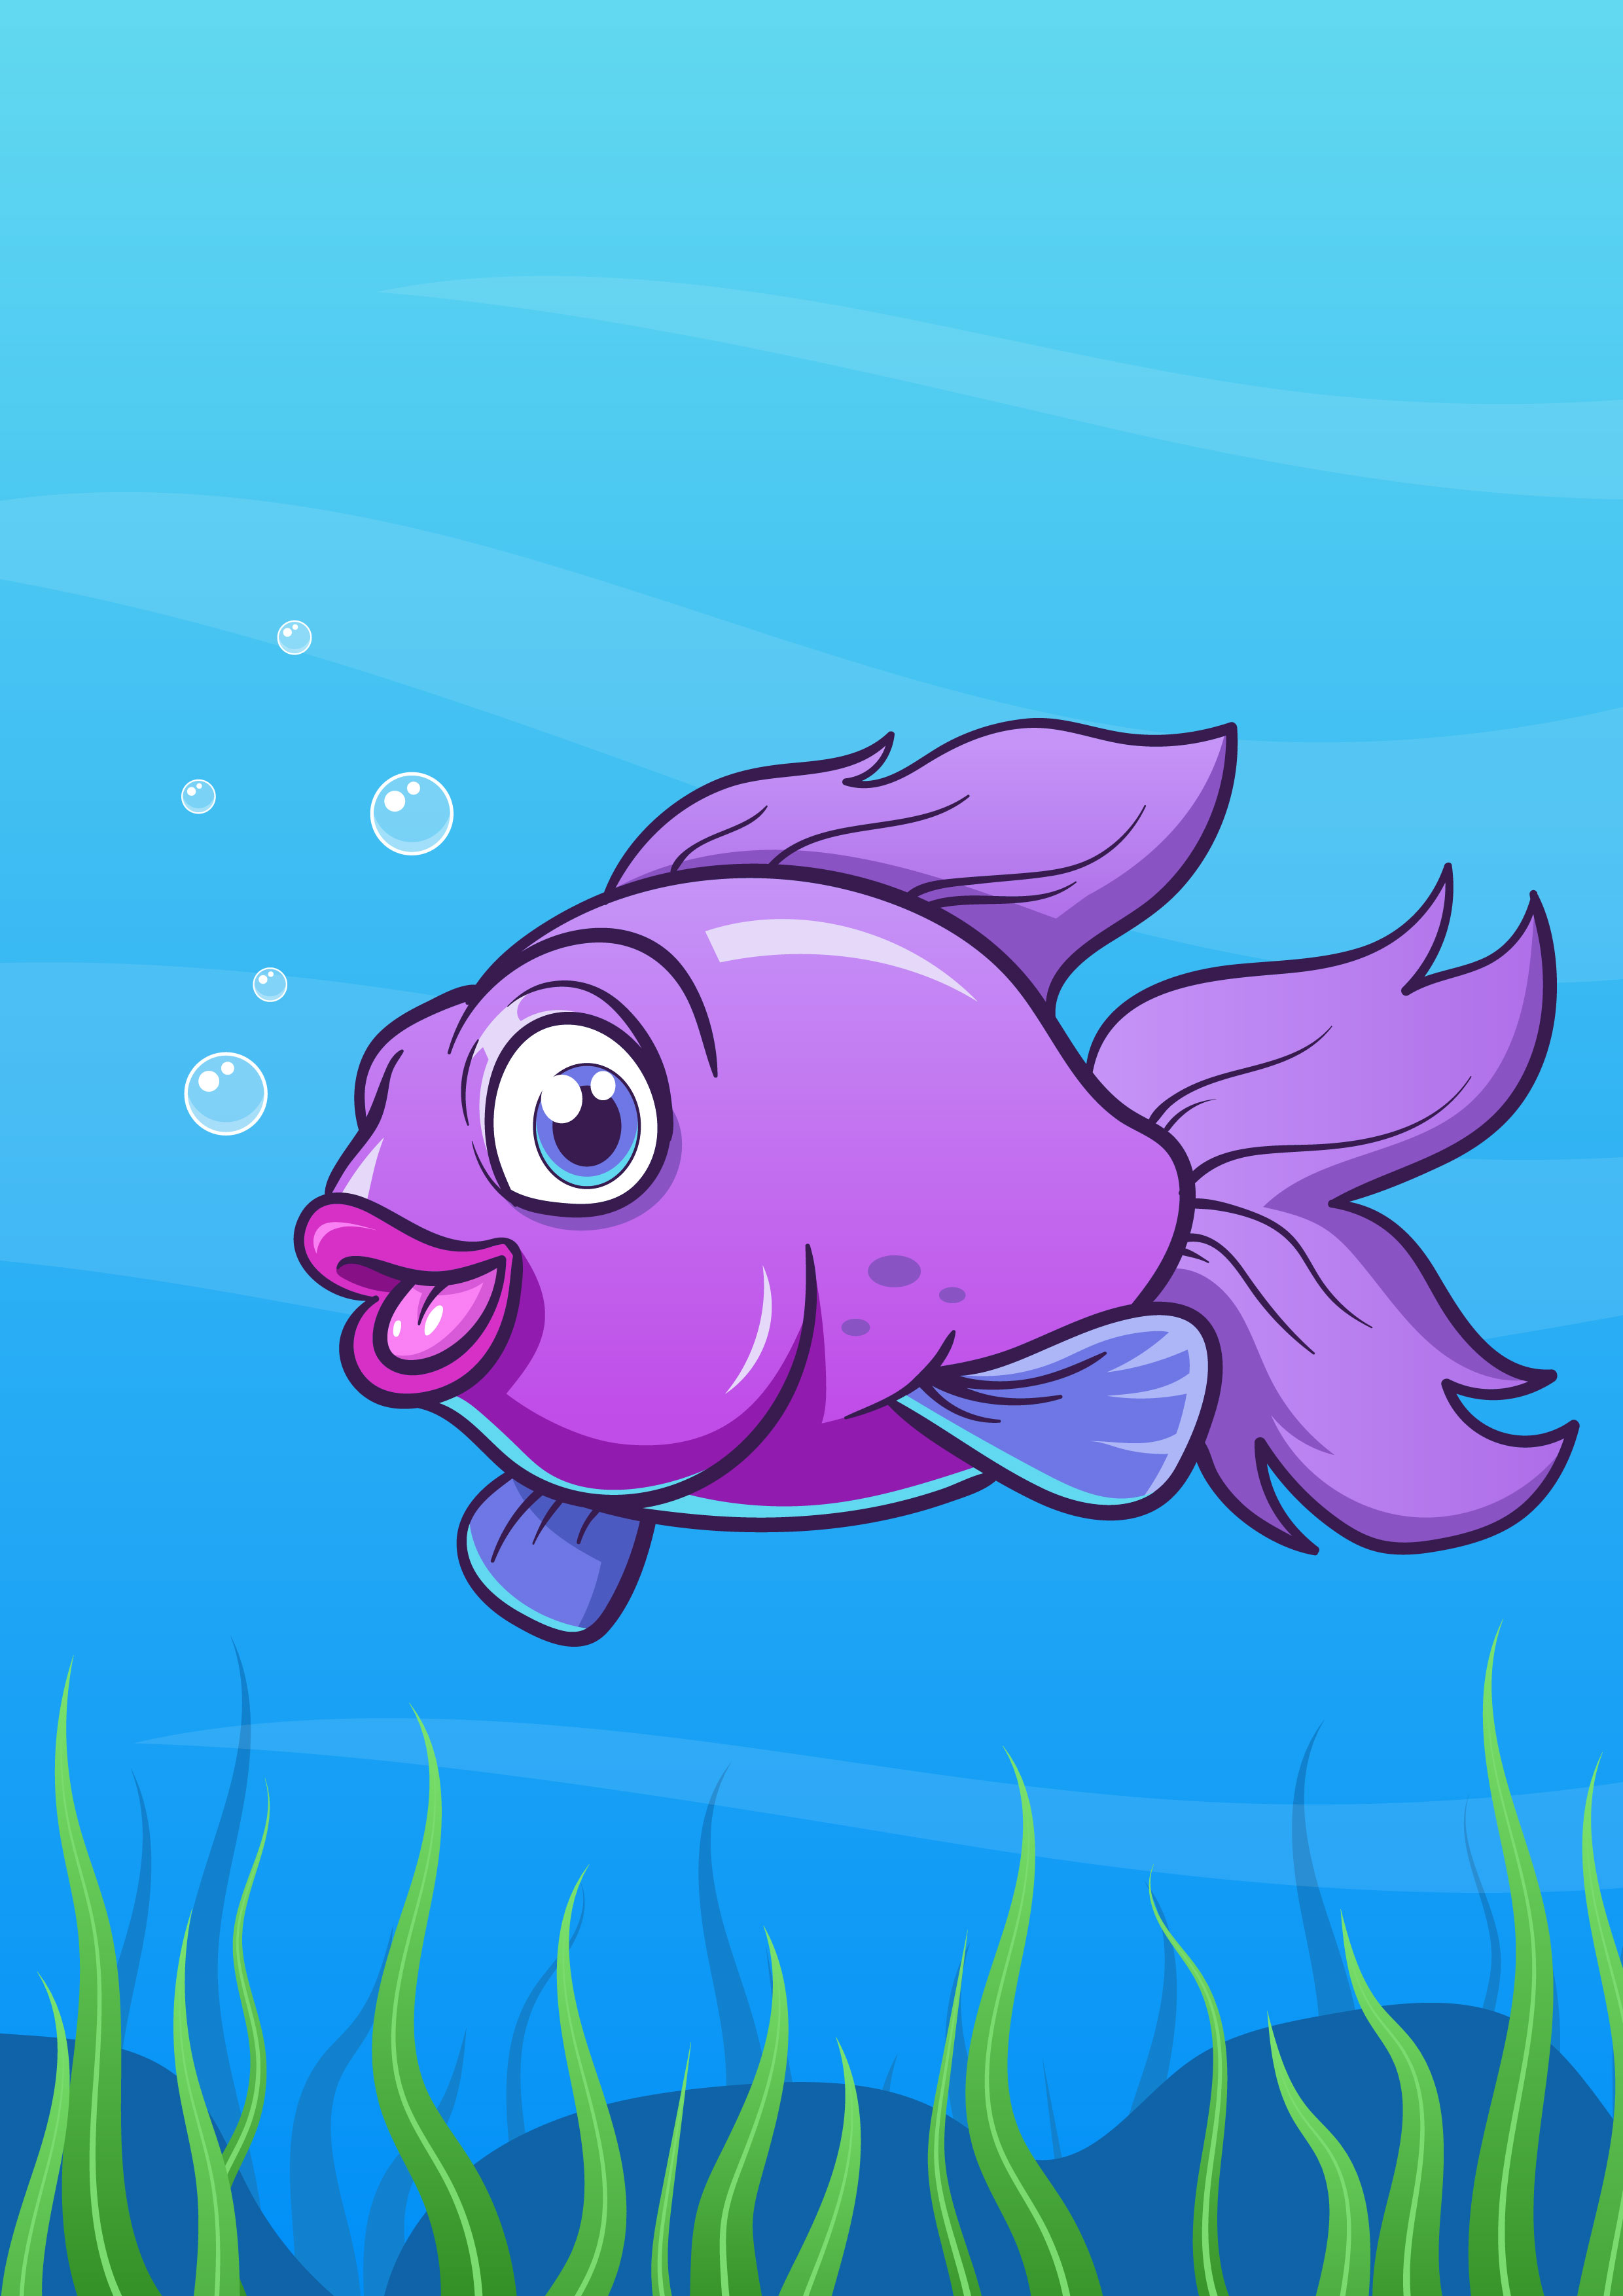 Download Smile Cartoon Fish - Download Free Vectors, Clipart ...